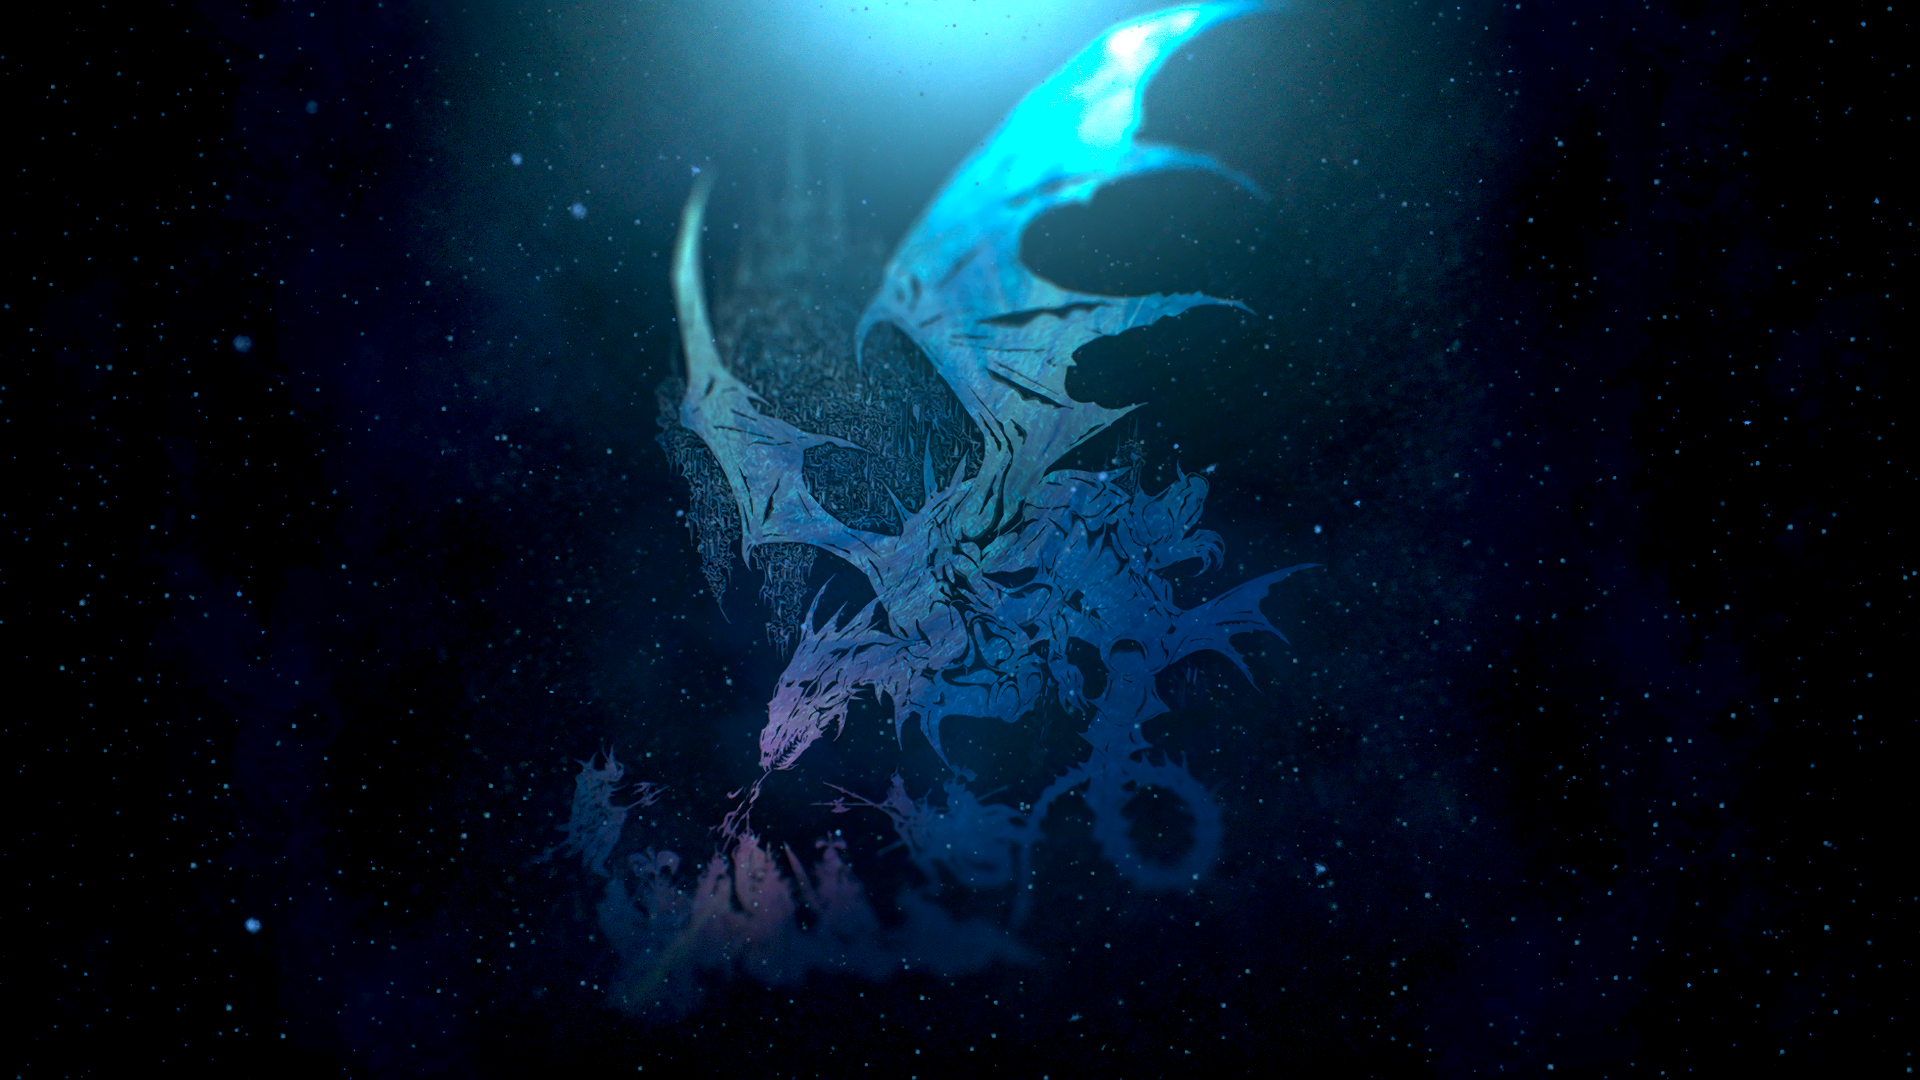 Final Fantasy XIV: A Realm Reborn, video games, video game art, game